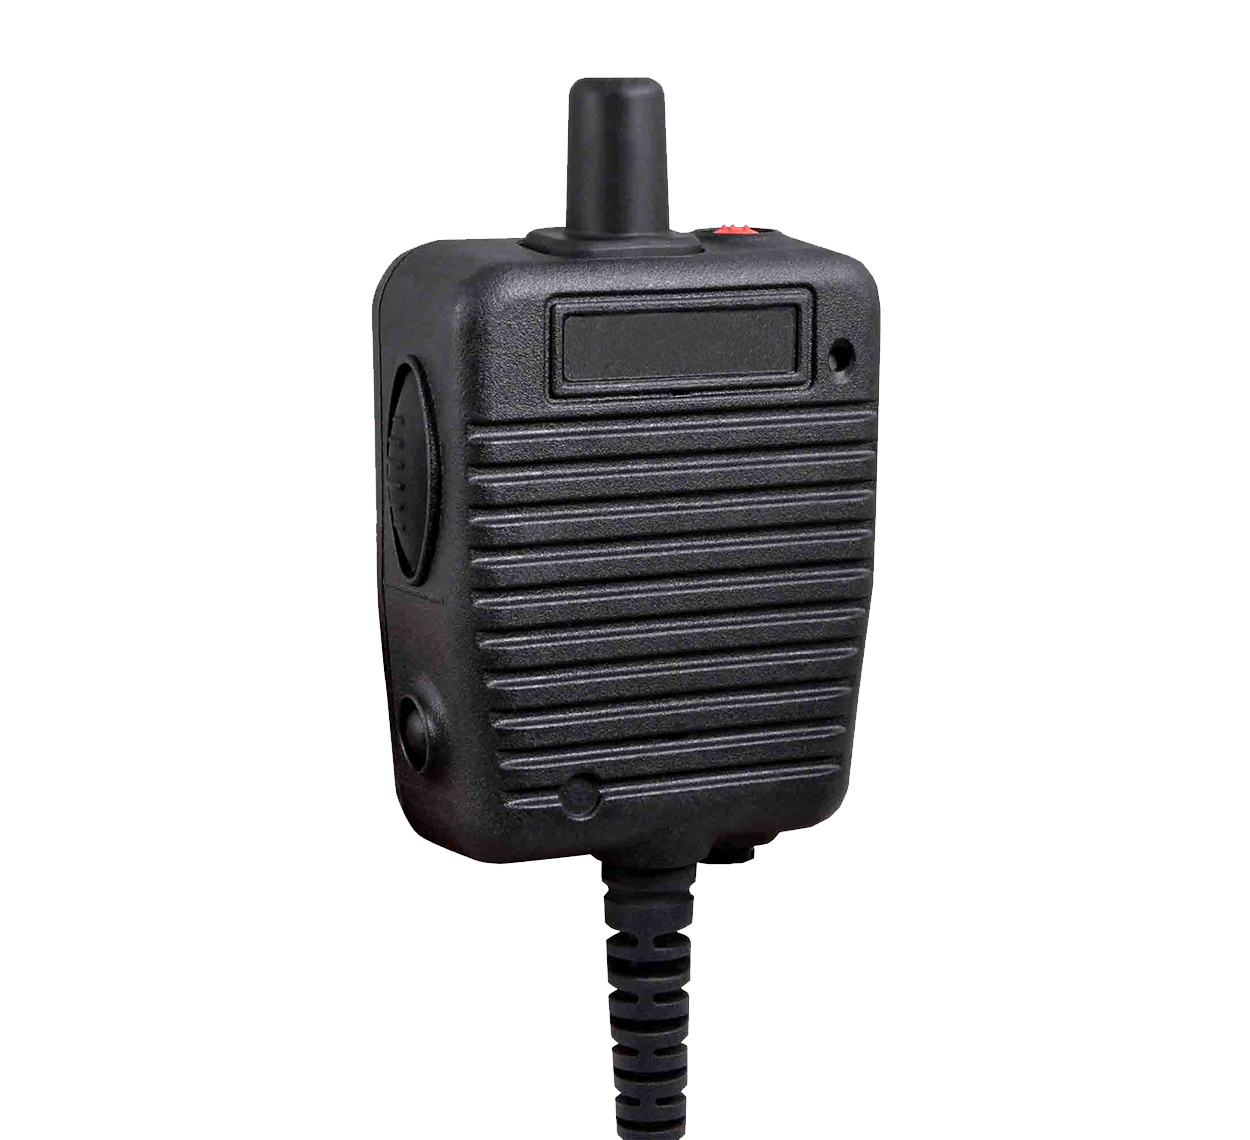 XG-15P Two Way Portable Radio Microphones and Audio